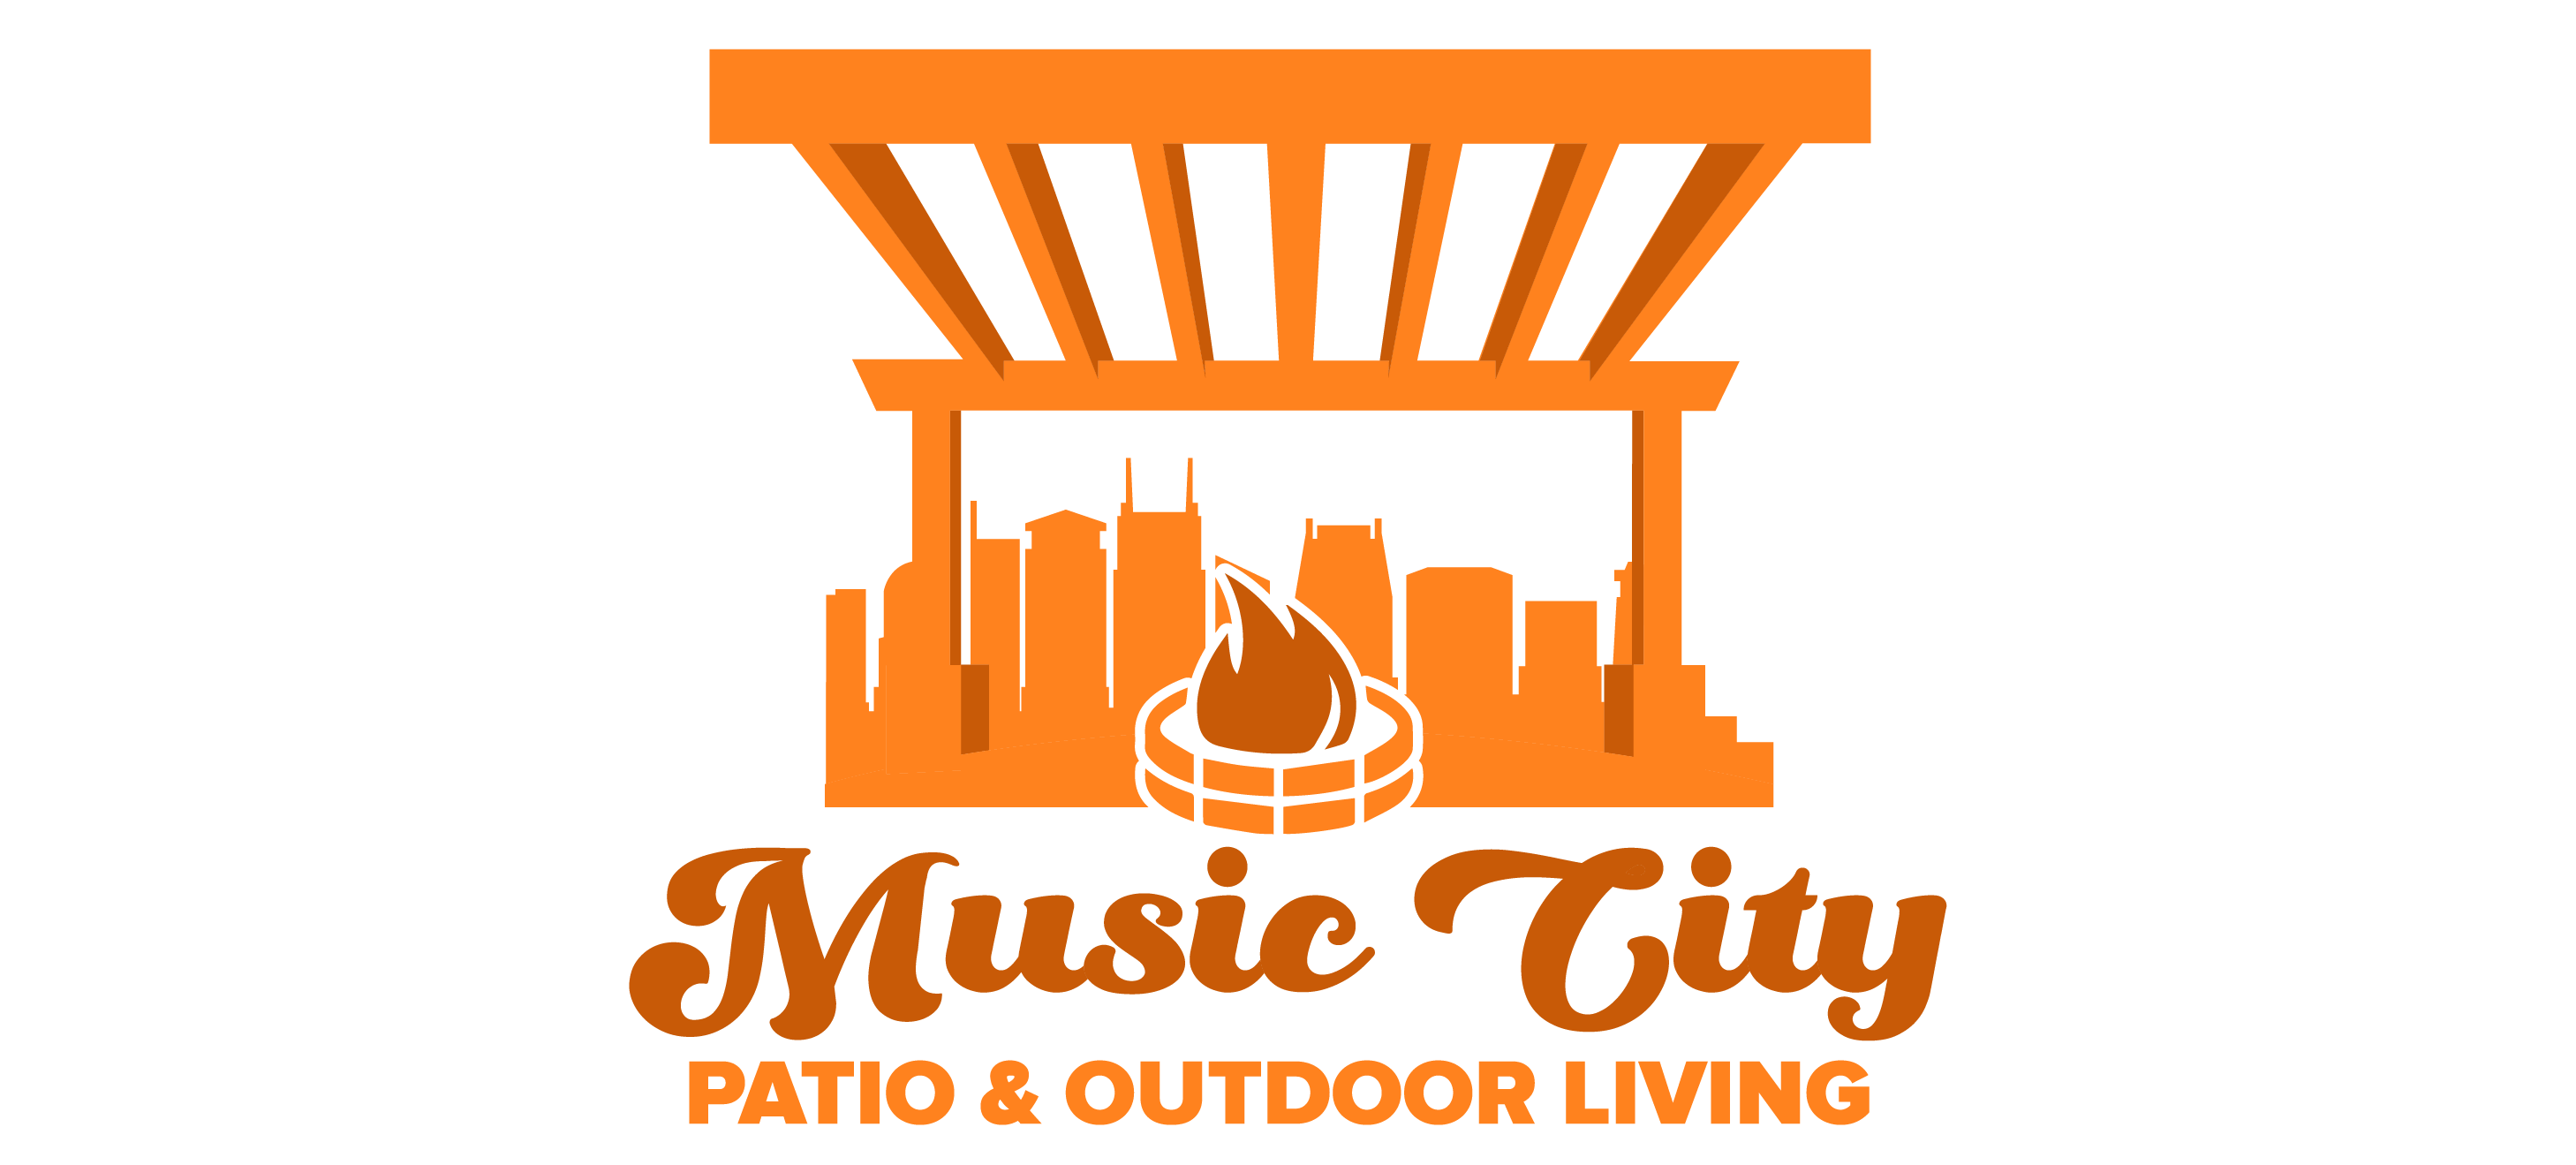 Music City Patio & Outdoor Living-01